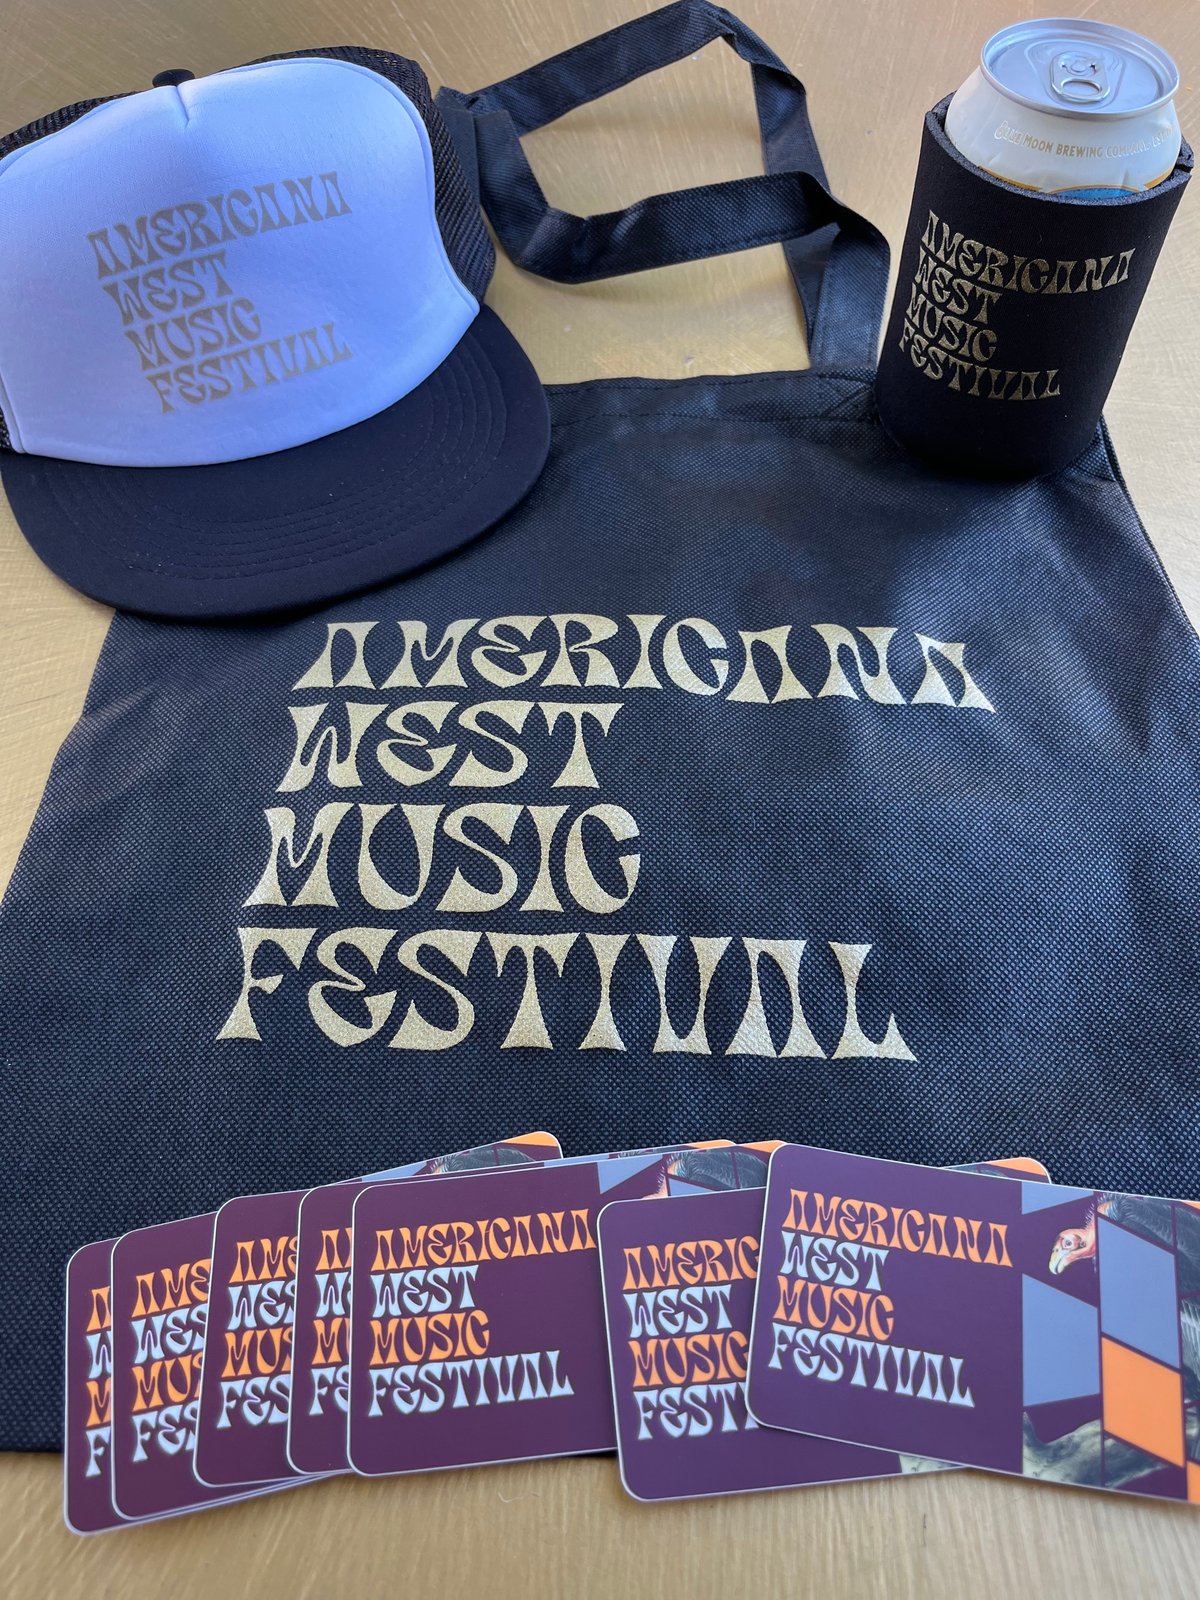 Image of Americana West Music Fest Merch Bundle